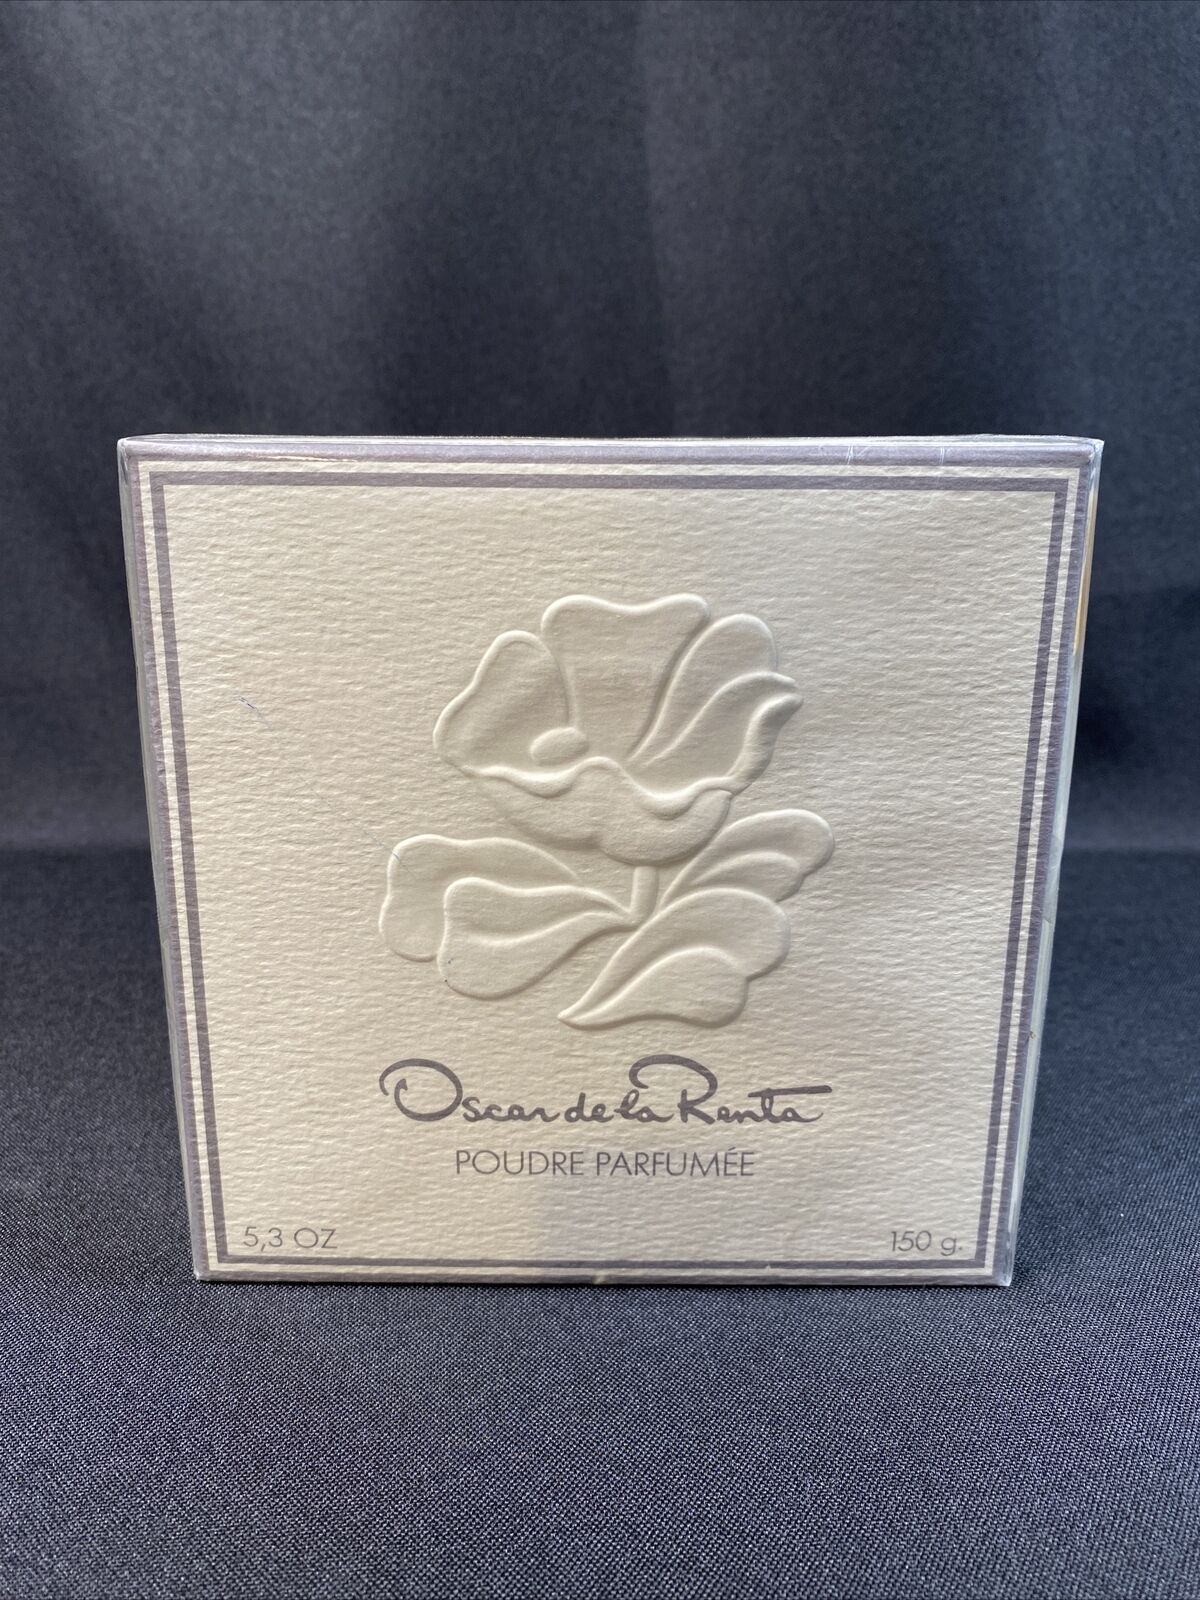 Oscar de la Renta Poudre Parfumee Bath Powder 5.3 oz RARE Vintage Formula NEW